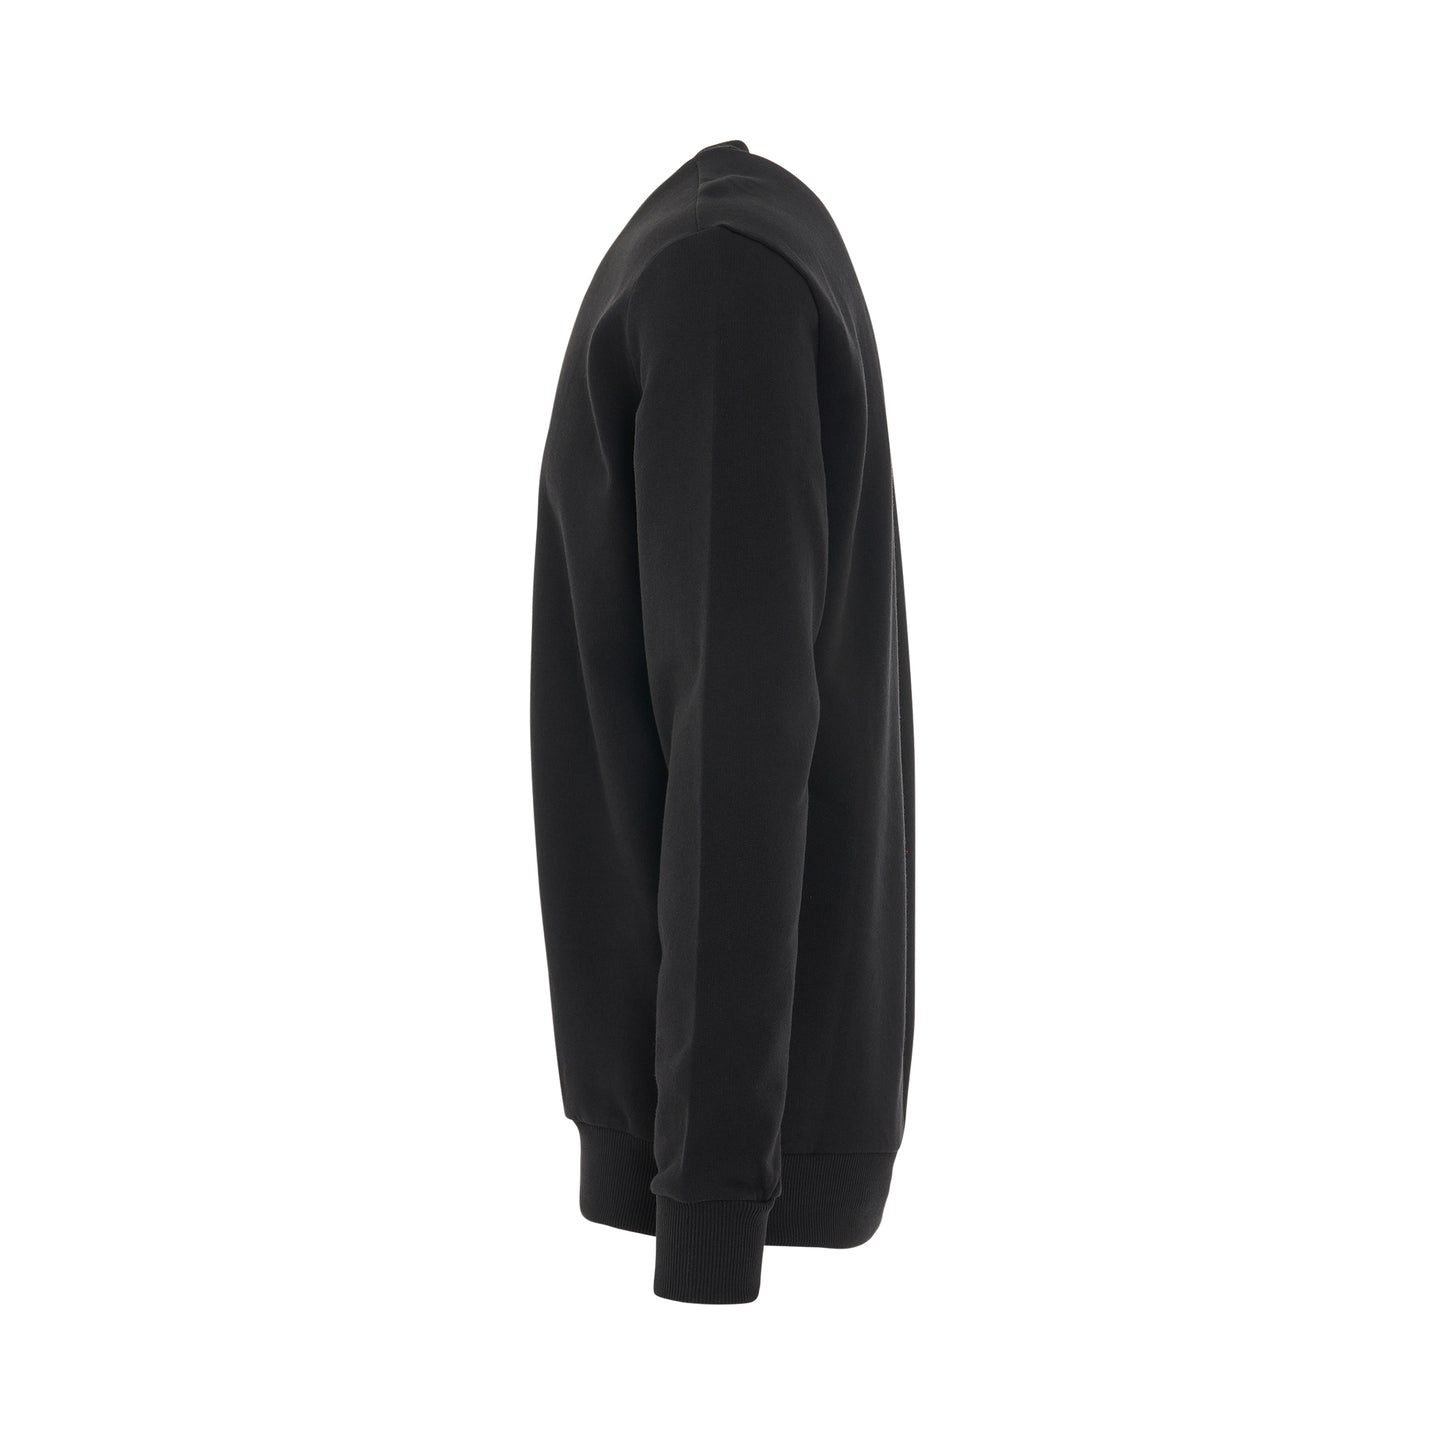 Visual Print Crewneck Sweater in Black